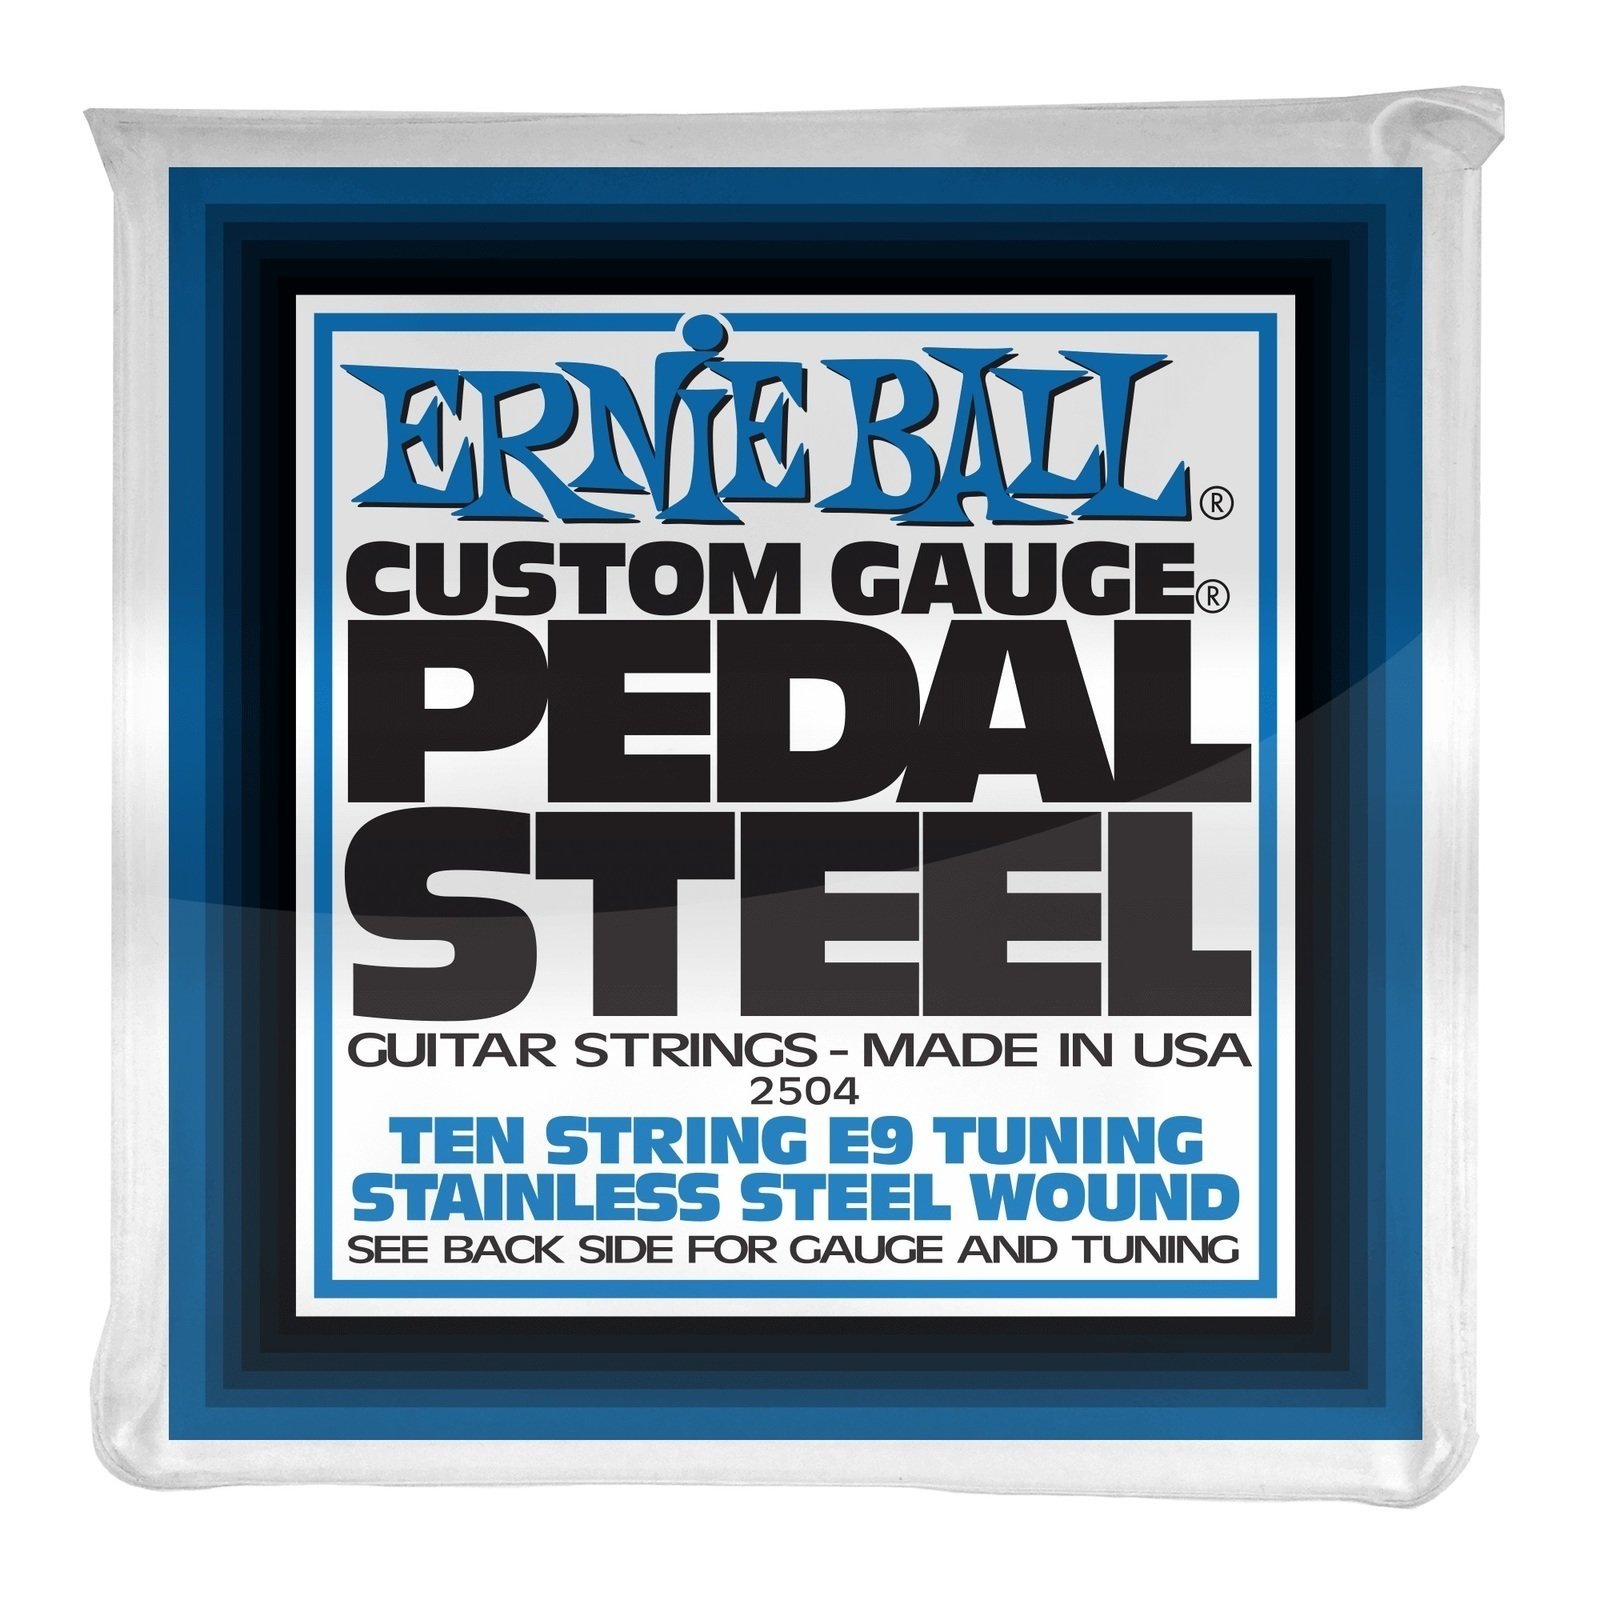 Struny pro kytaru Ernie Ball 2504 Pedal Steel